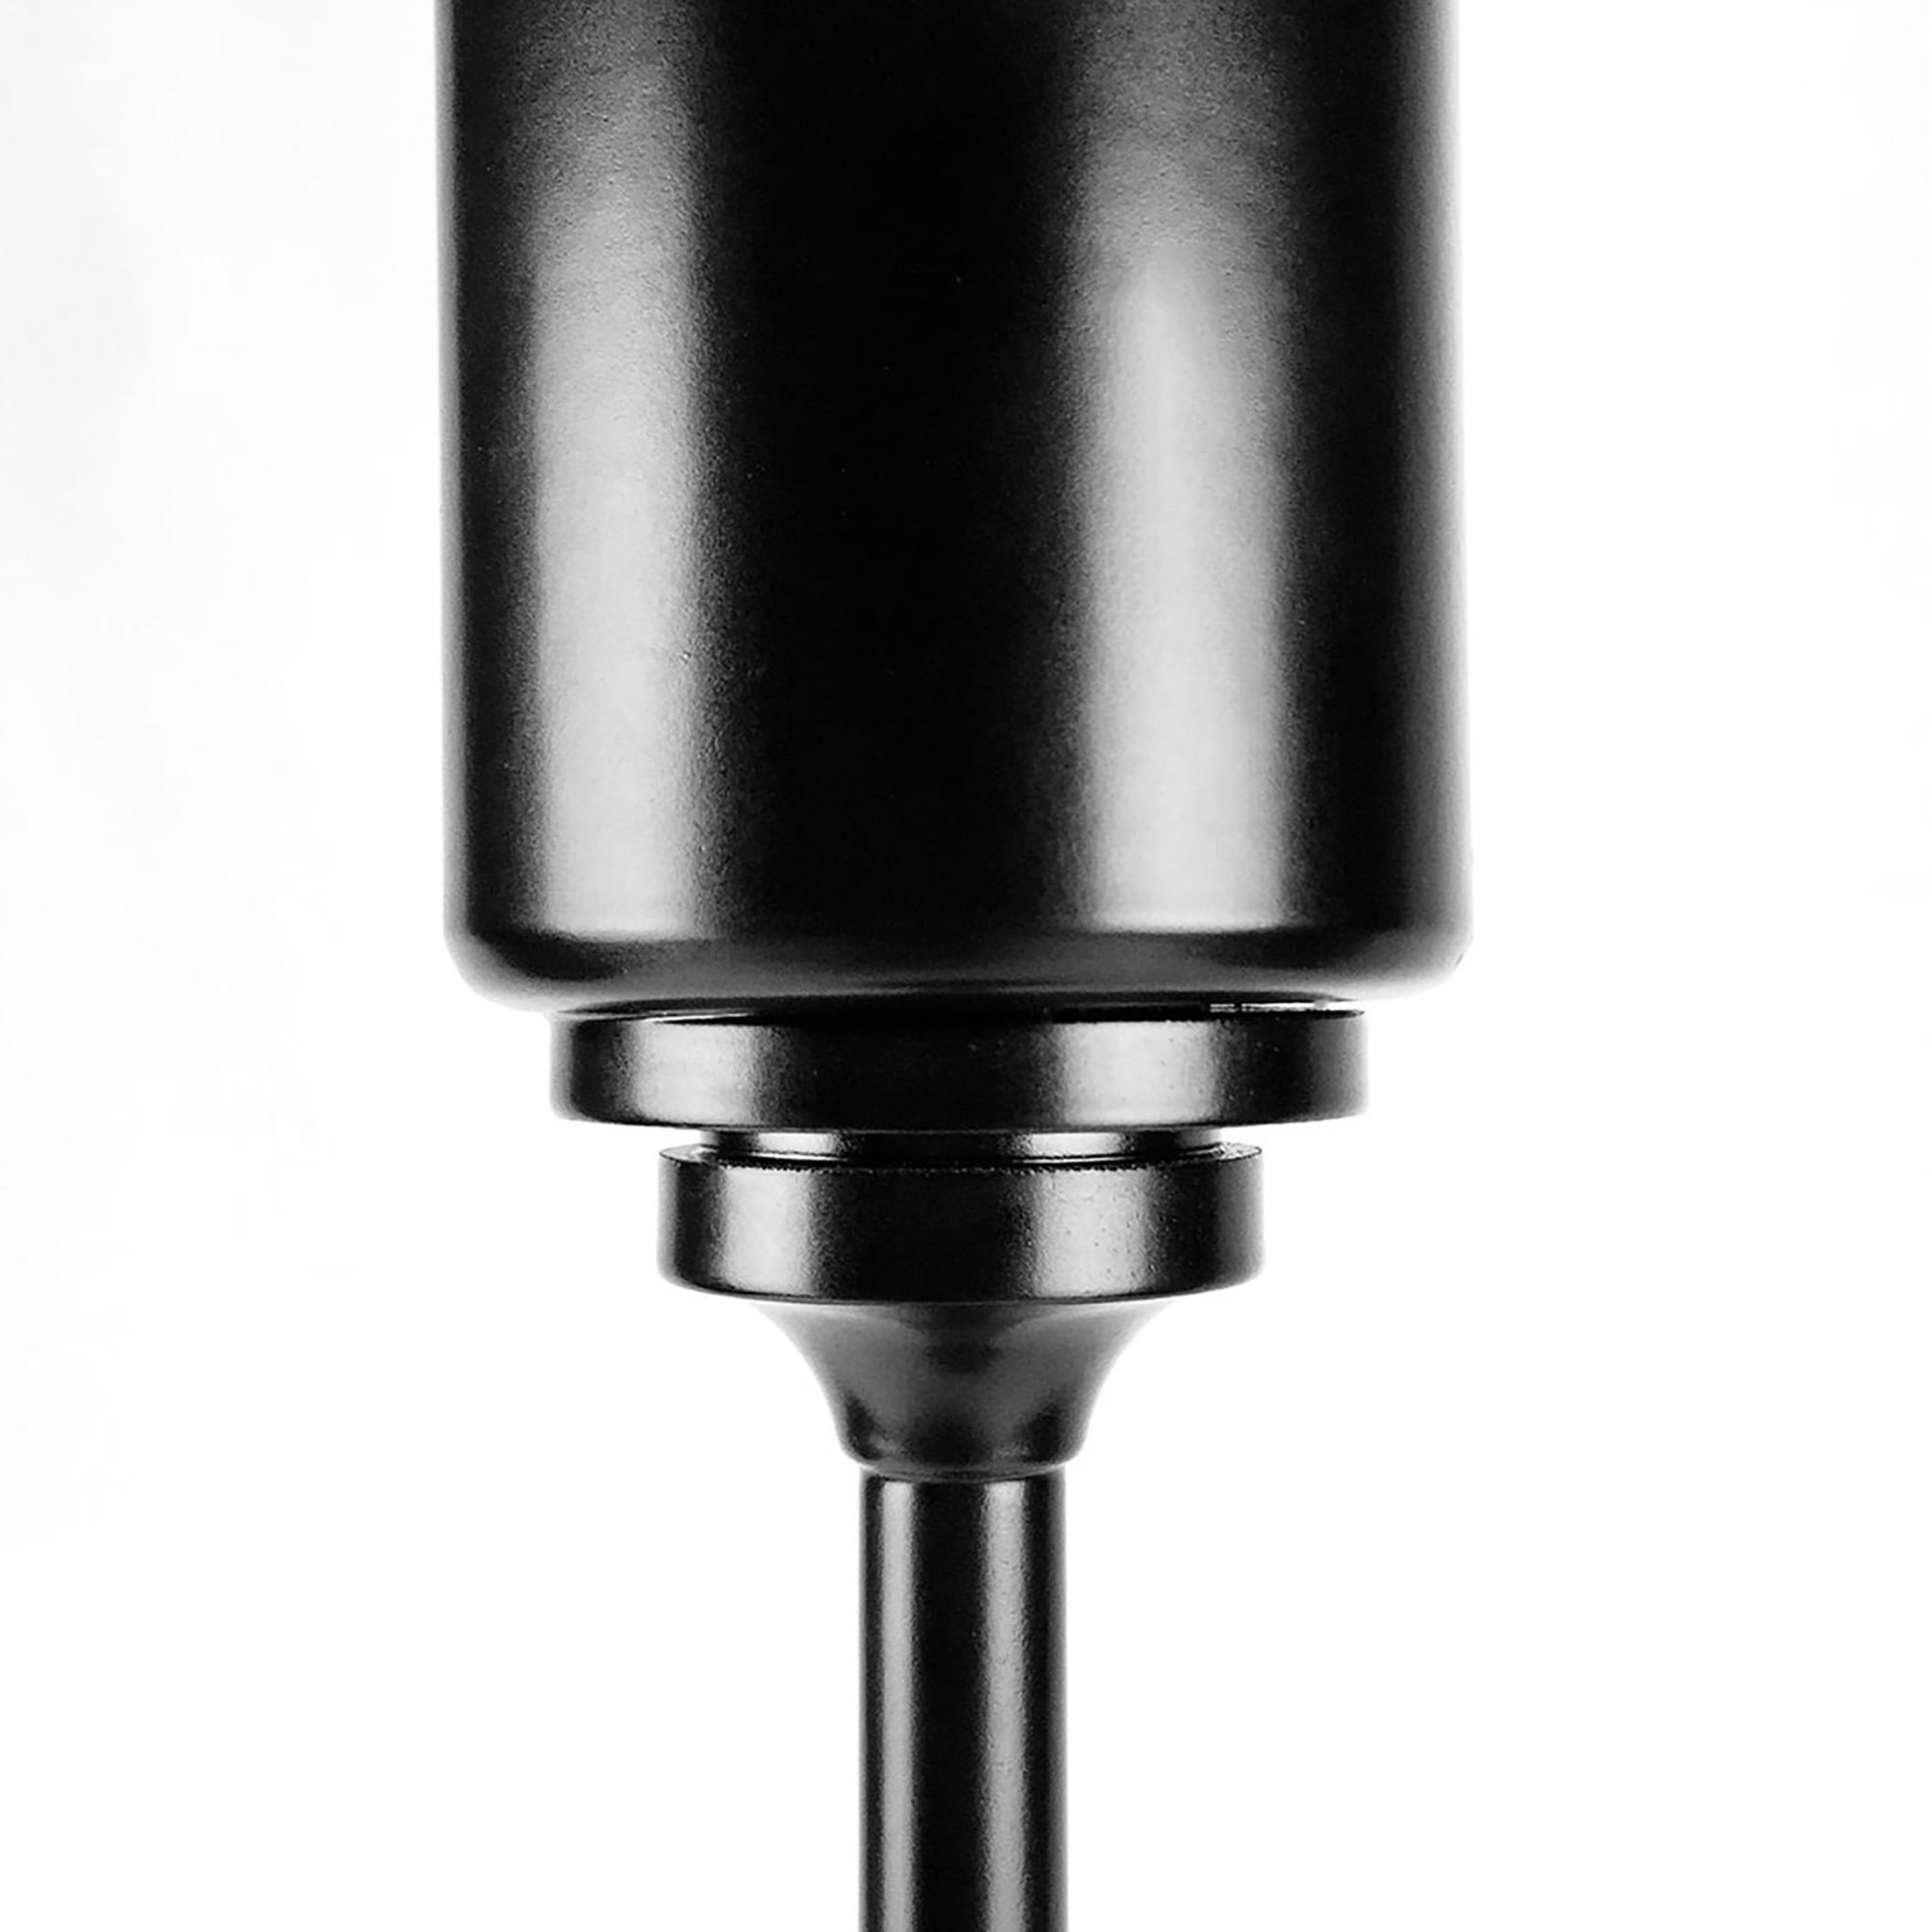 Semele Black Leather Floor Lamp #1 - Alternative view 4